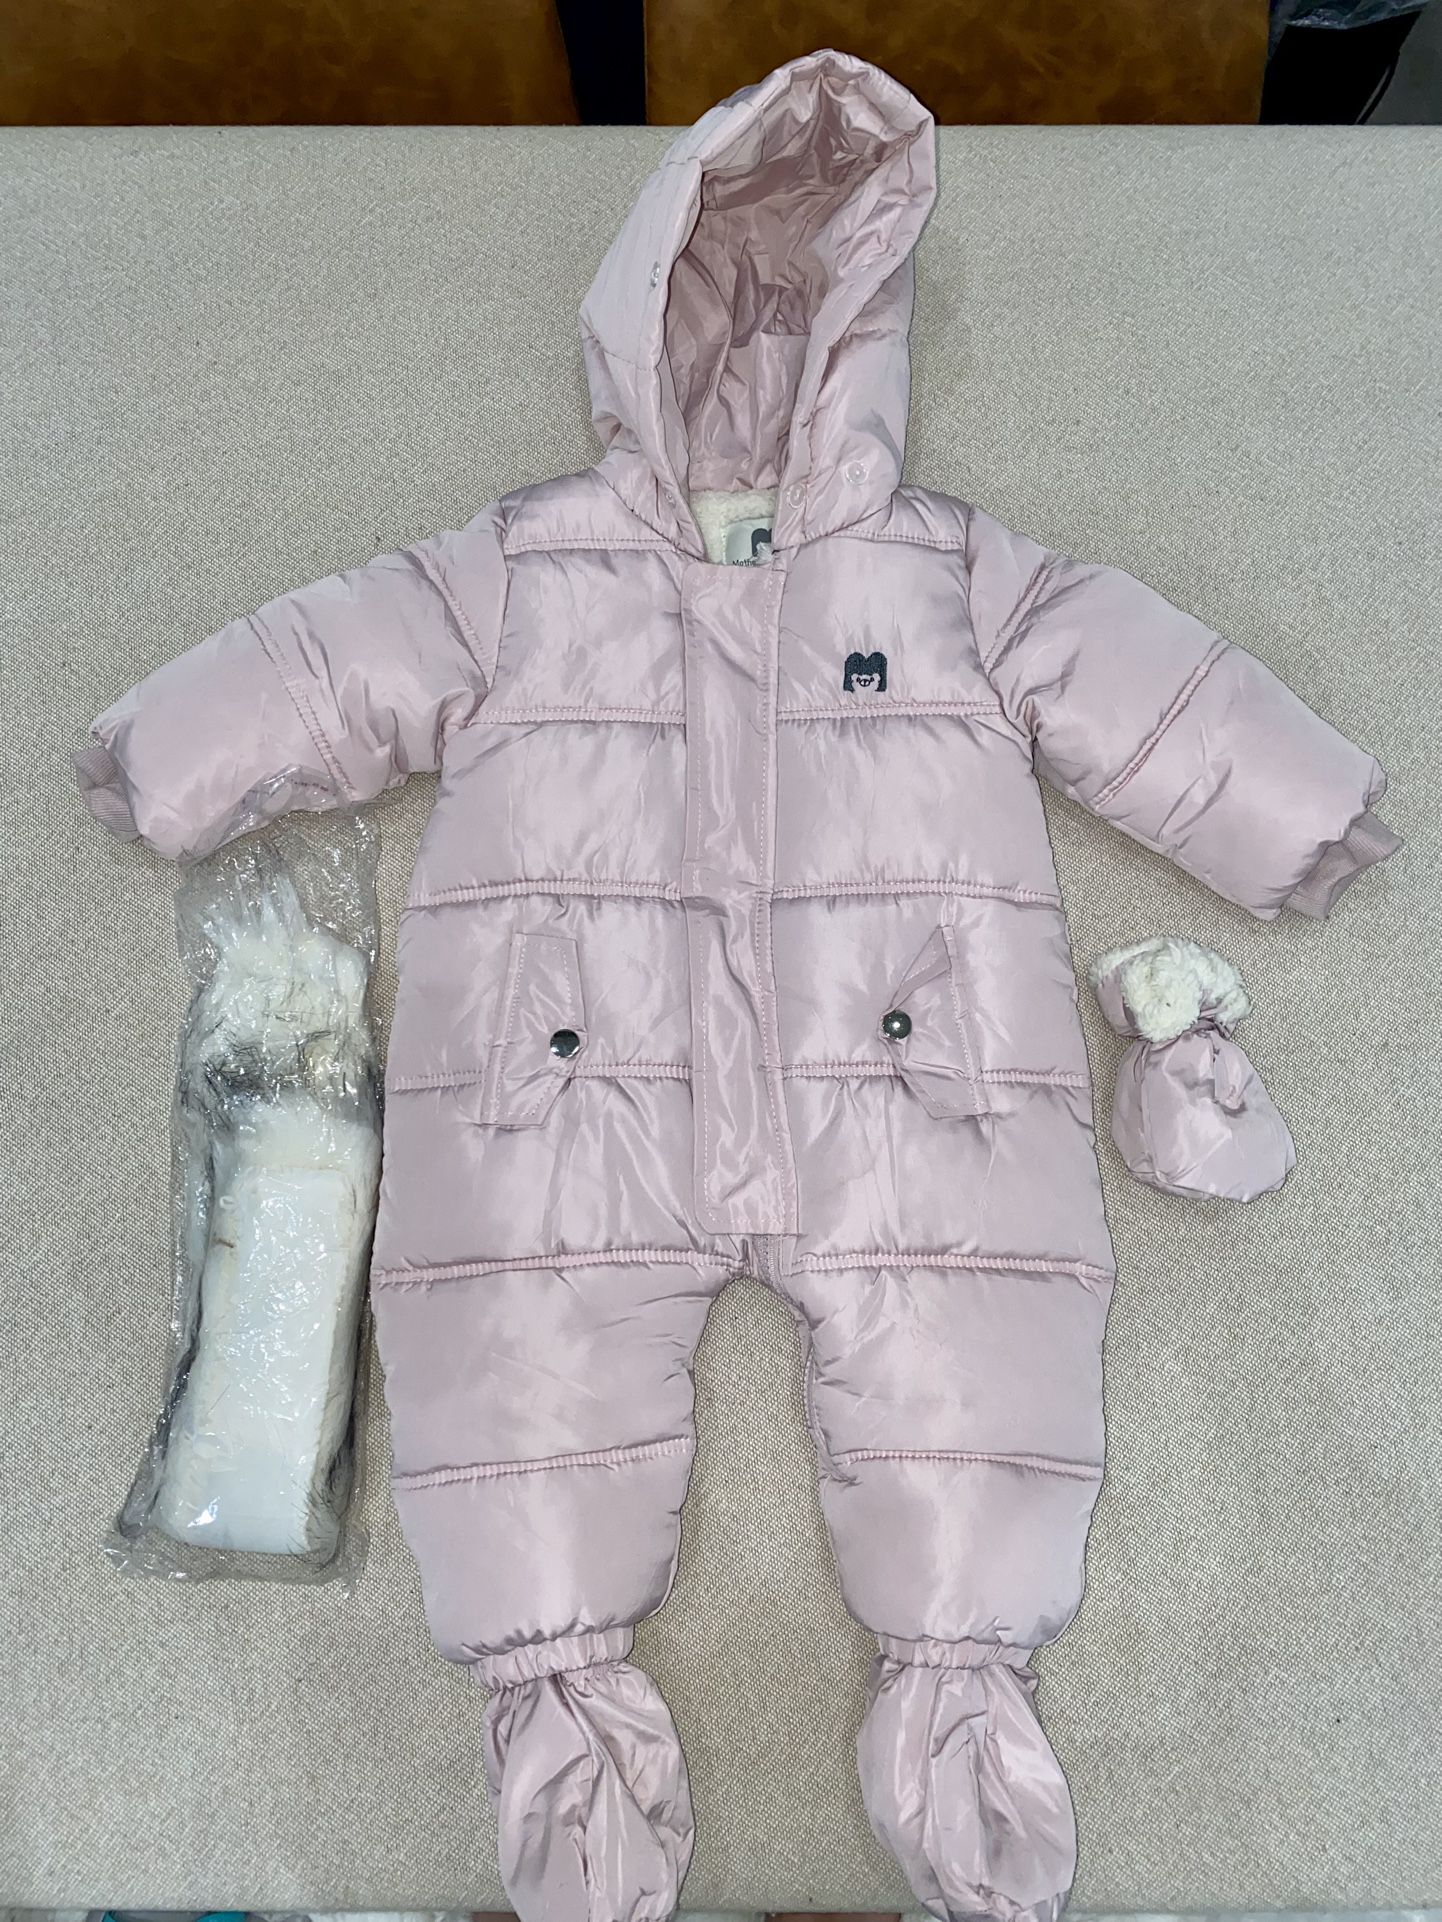 Size 12-18 Months Baby Girl Winter Snowsuit Jacket Toddler Jumpsuit Hoodie